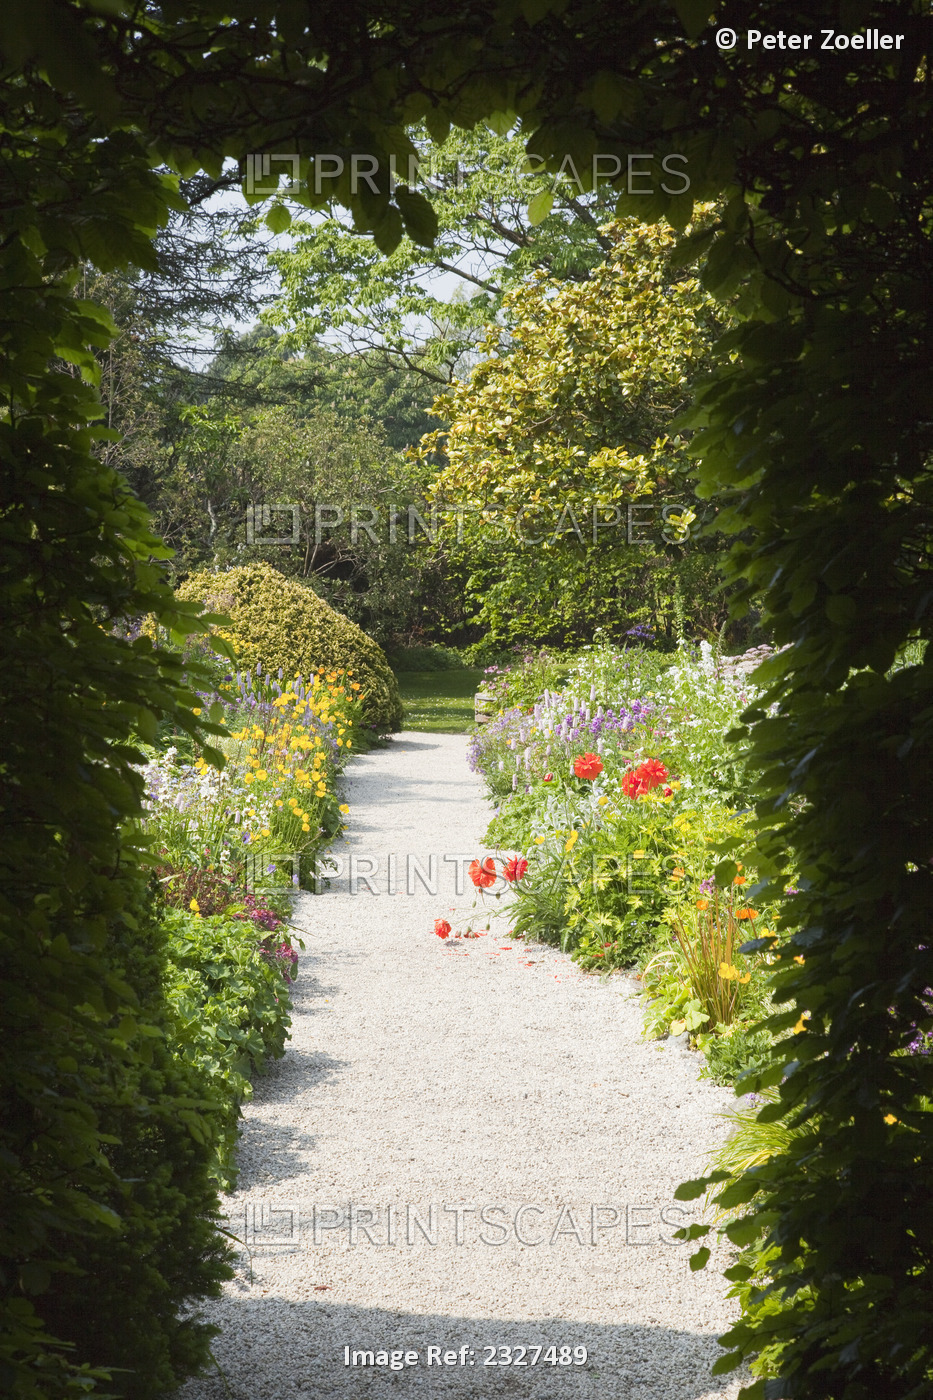 Mount usher gardens; Ashford county wicklow ireland